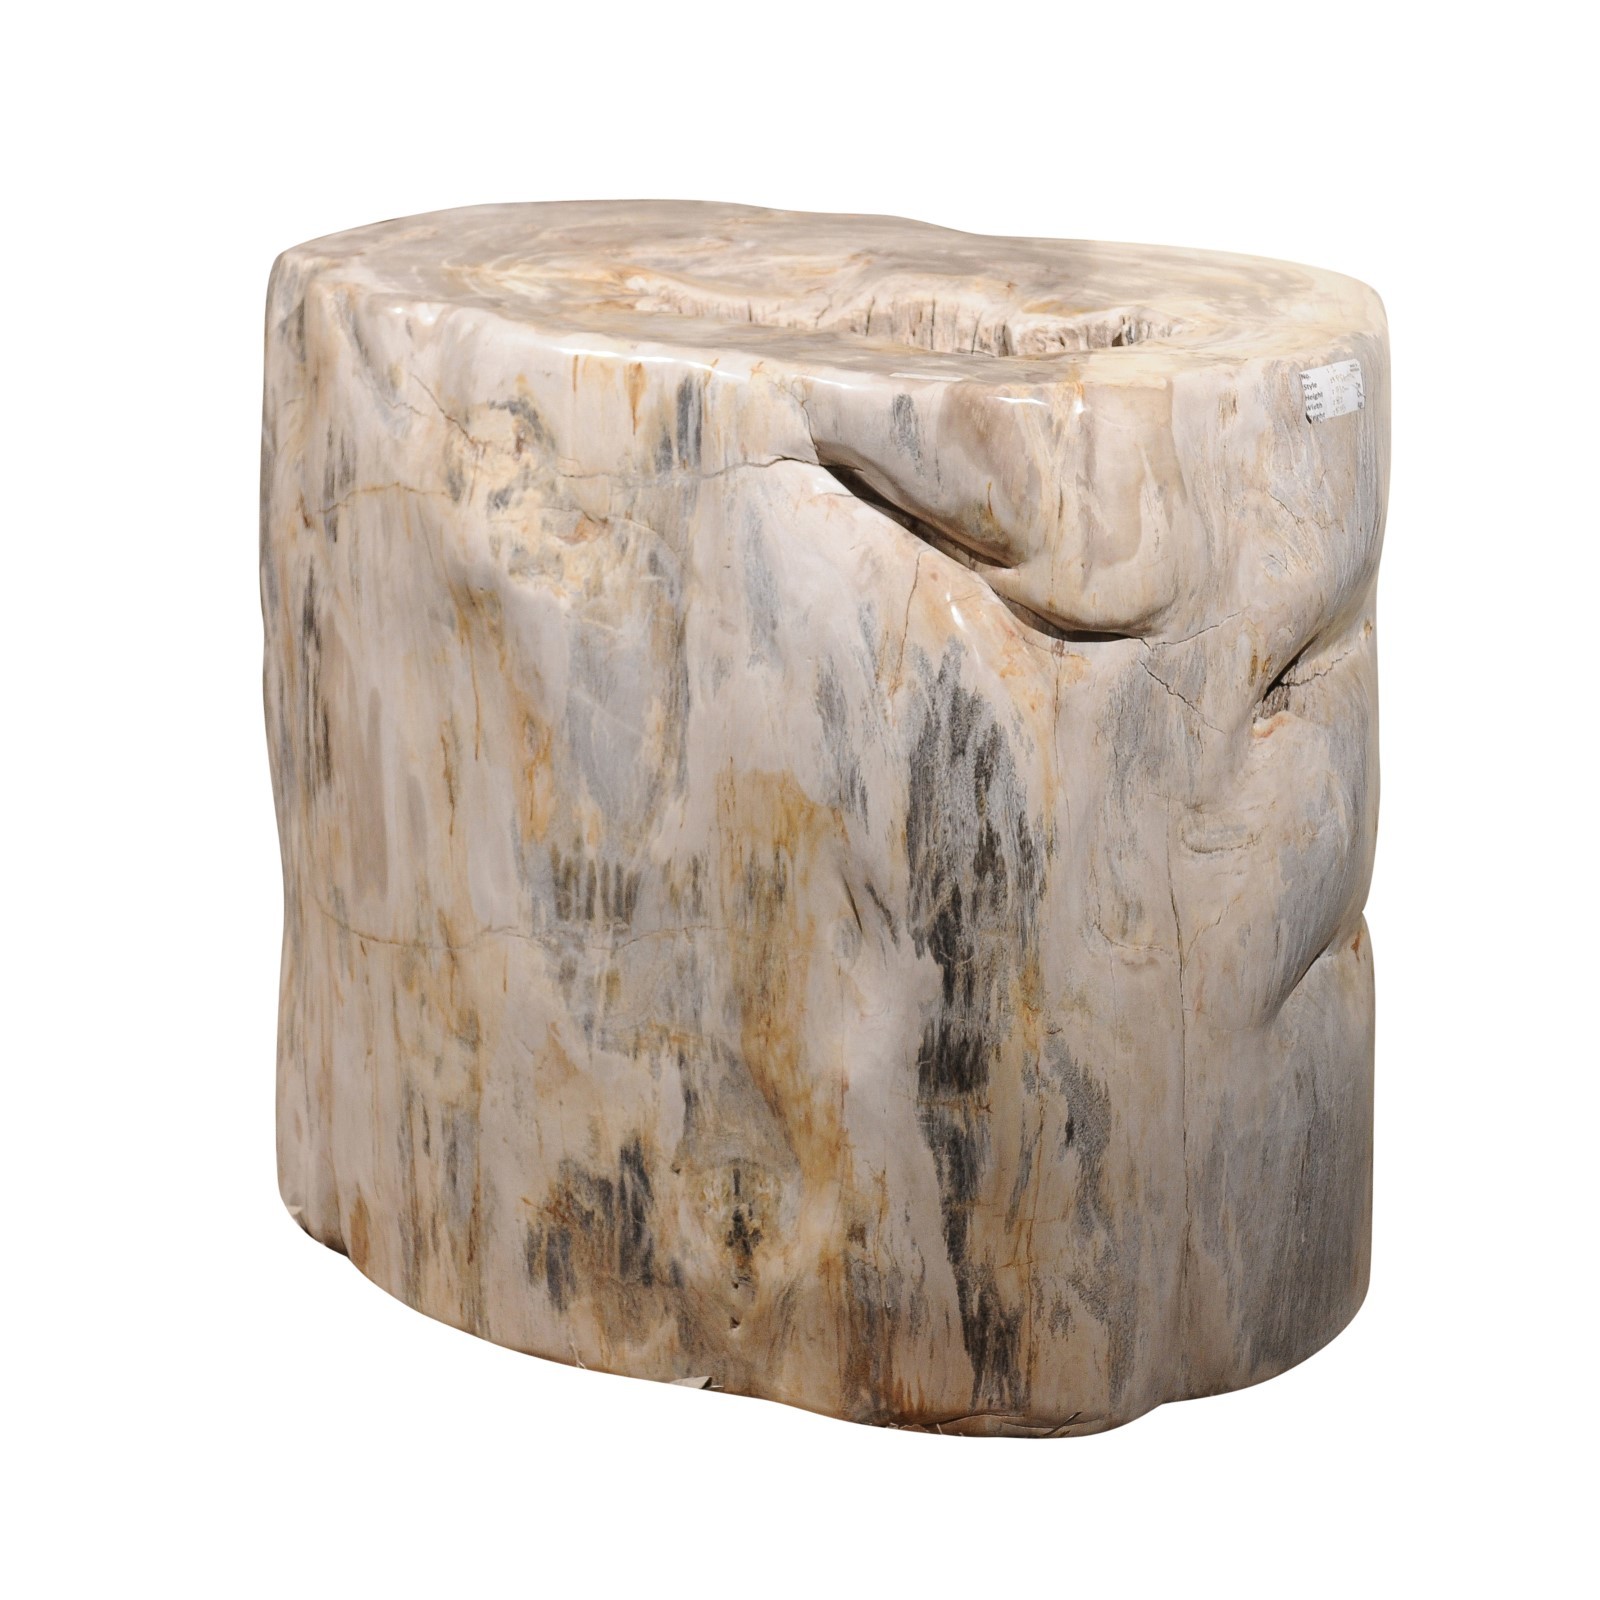 A Very Large Petrified Wood Table Base